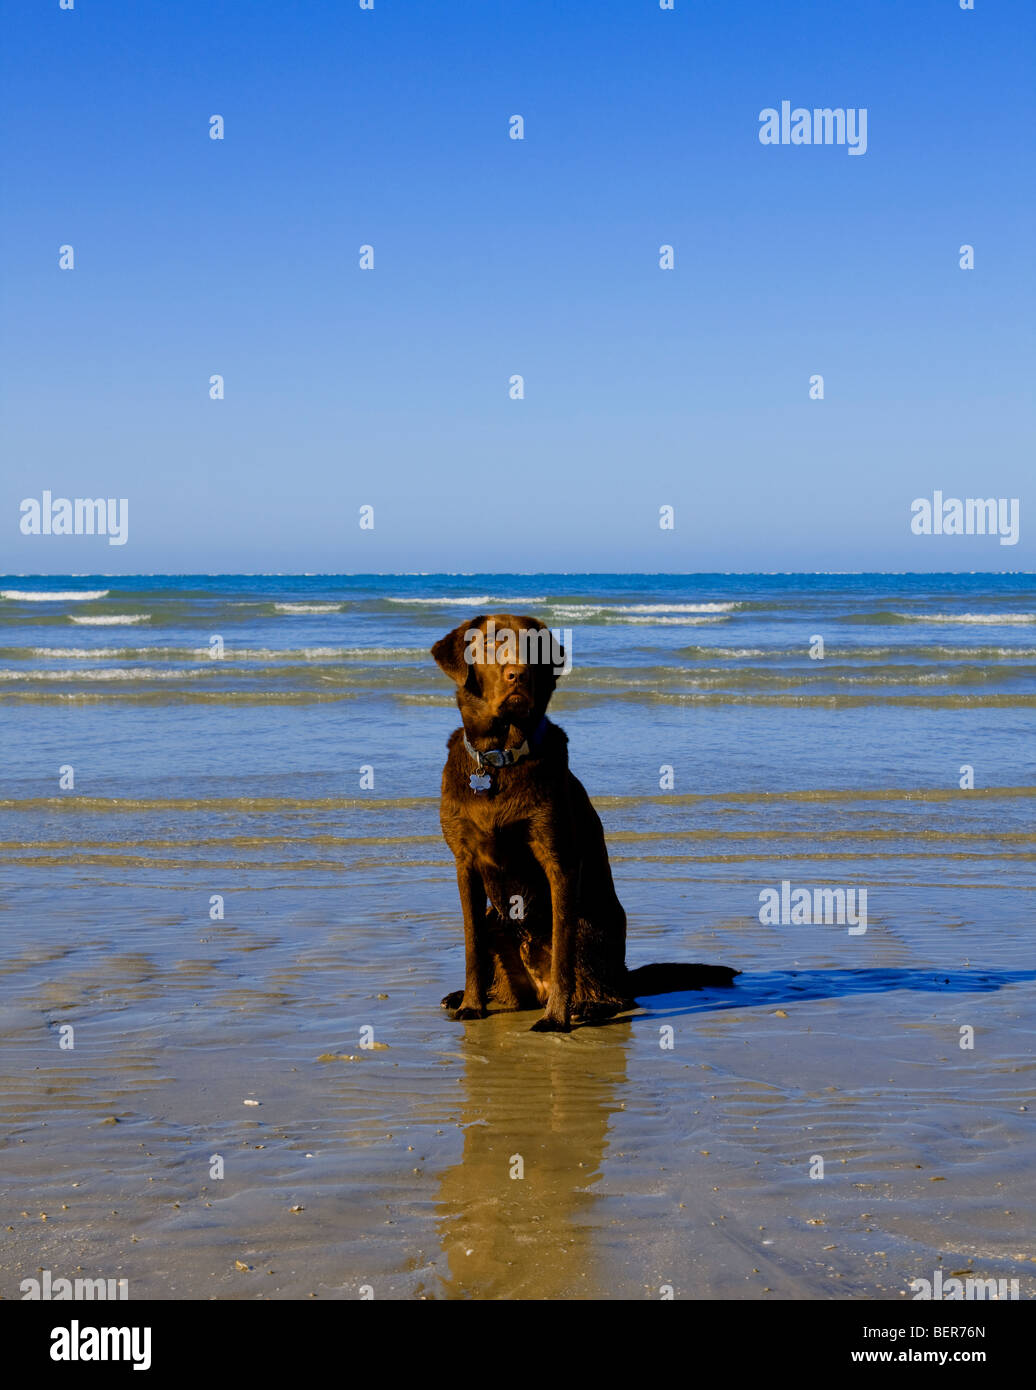 A chocolate Labrador dog enjoying the beach. Stock Photo